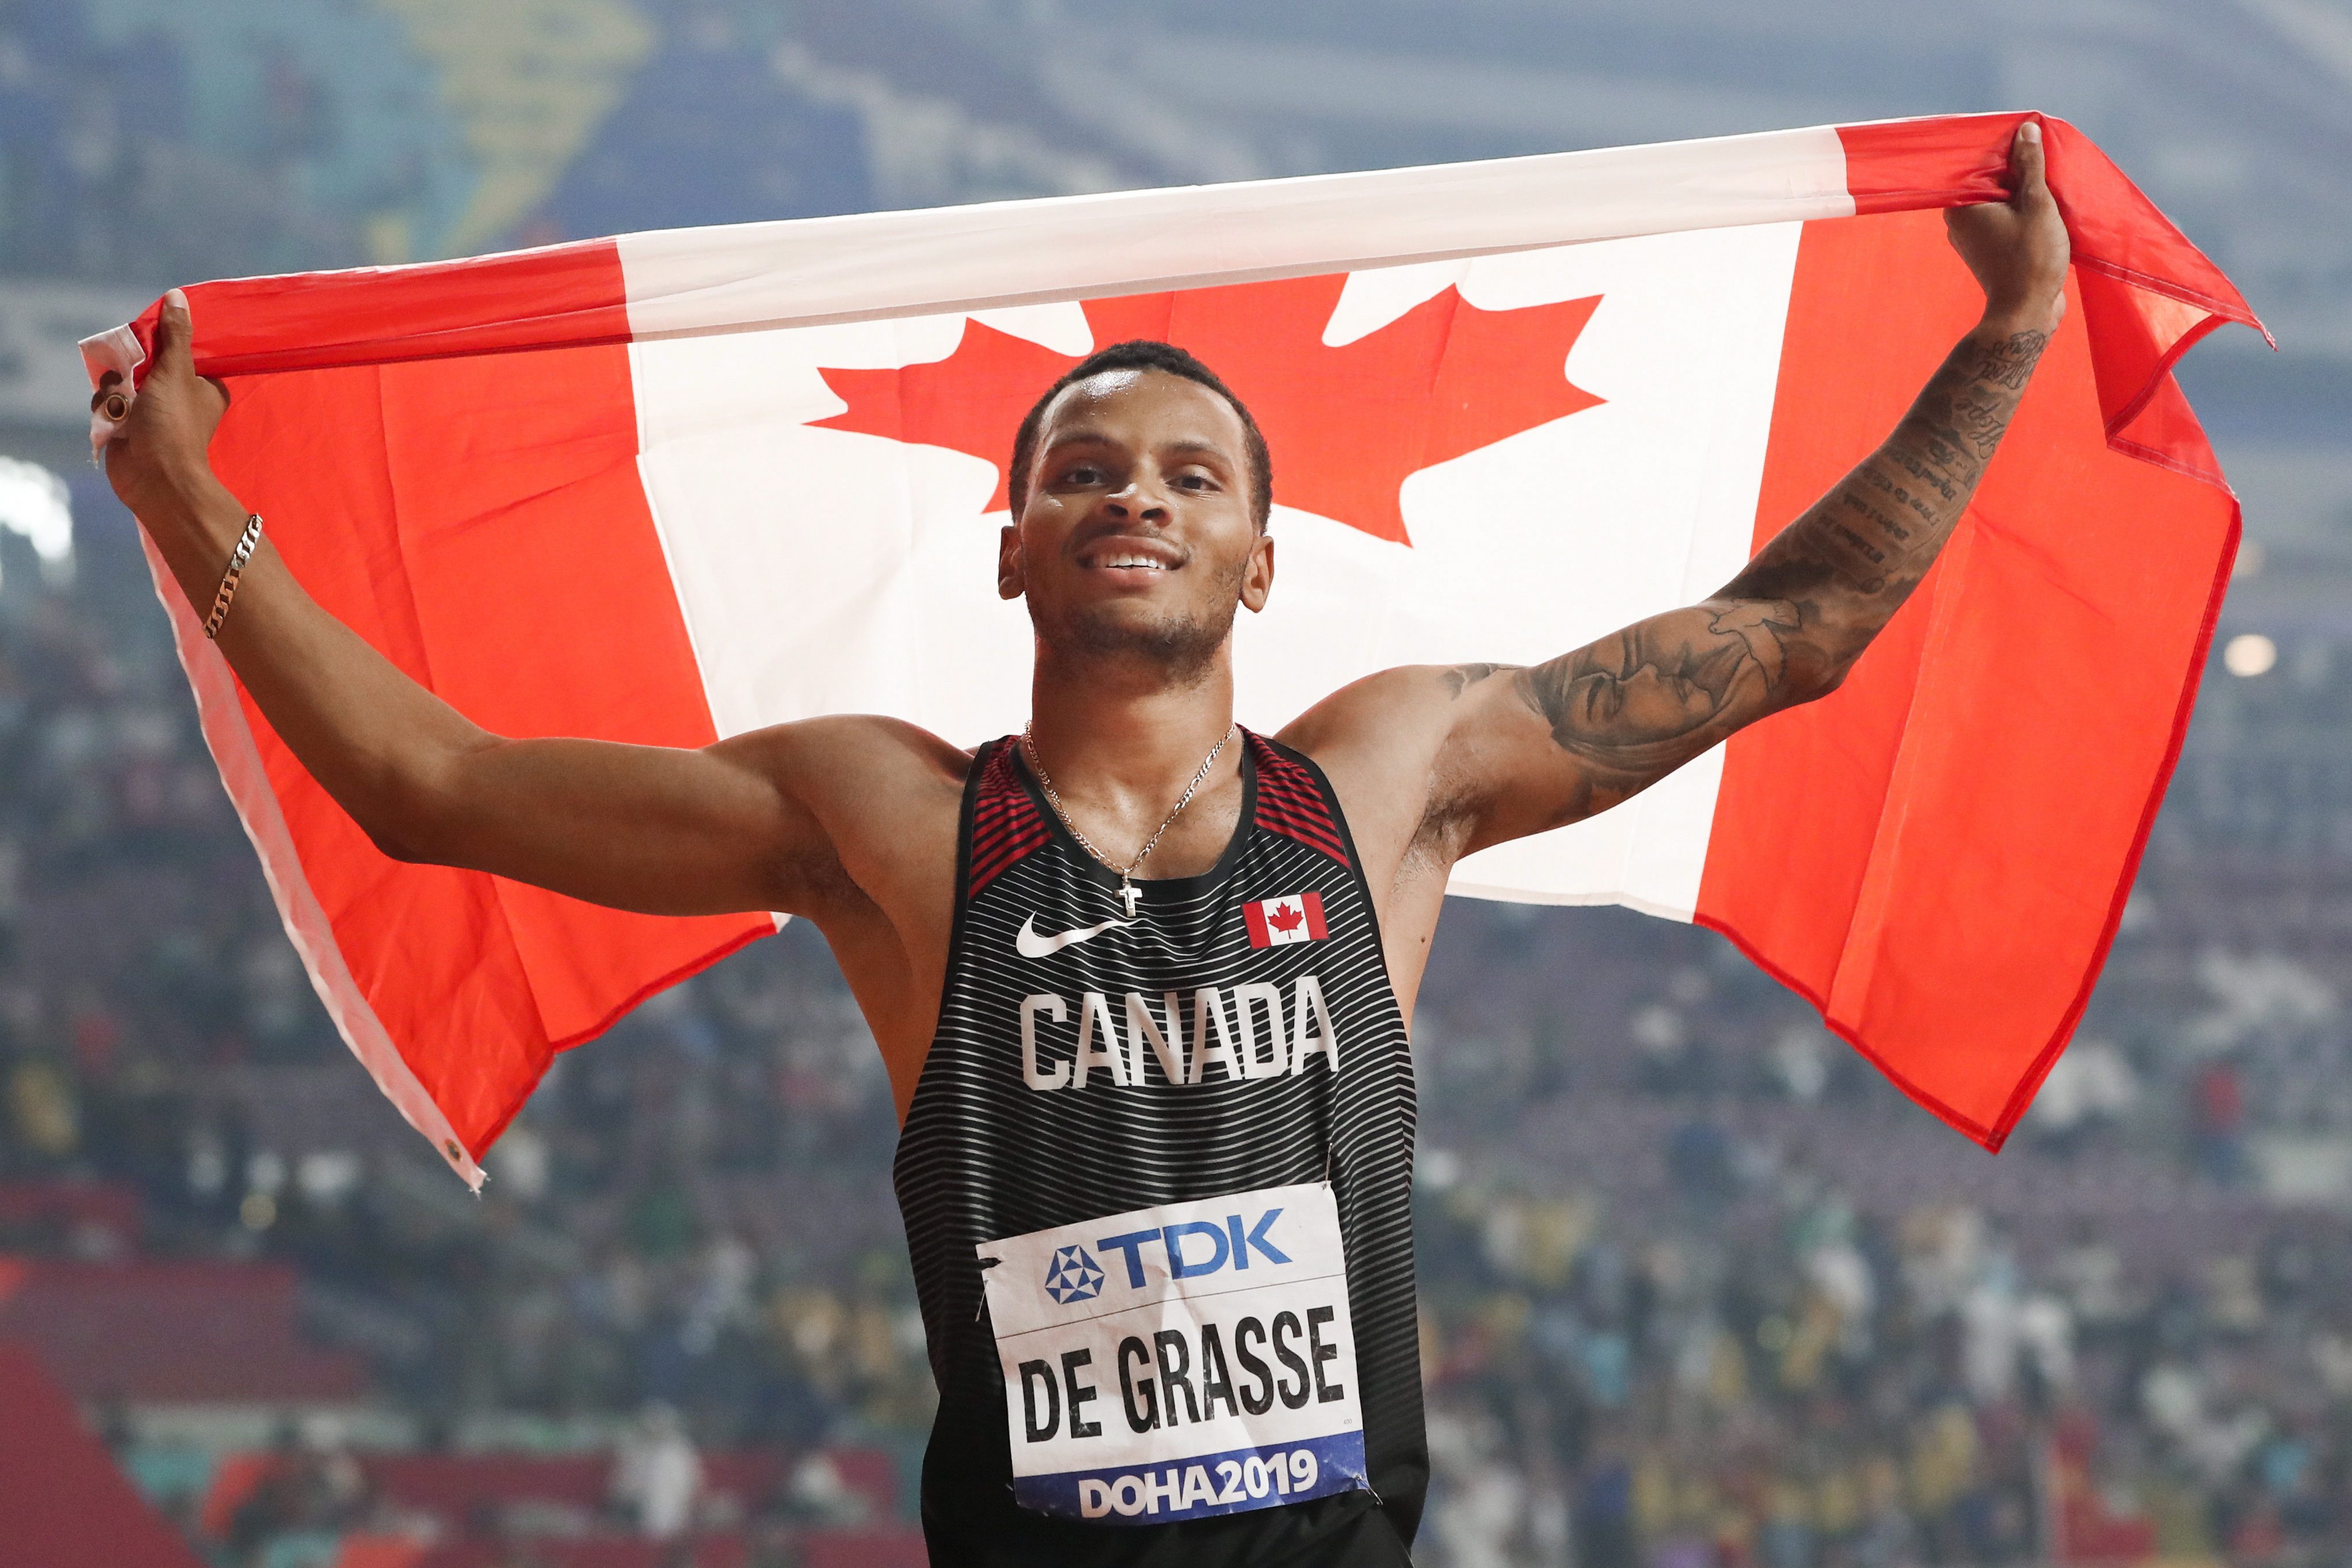 De Grasse holding Canadian flag above head smiling 